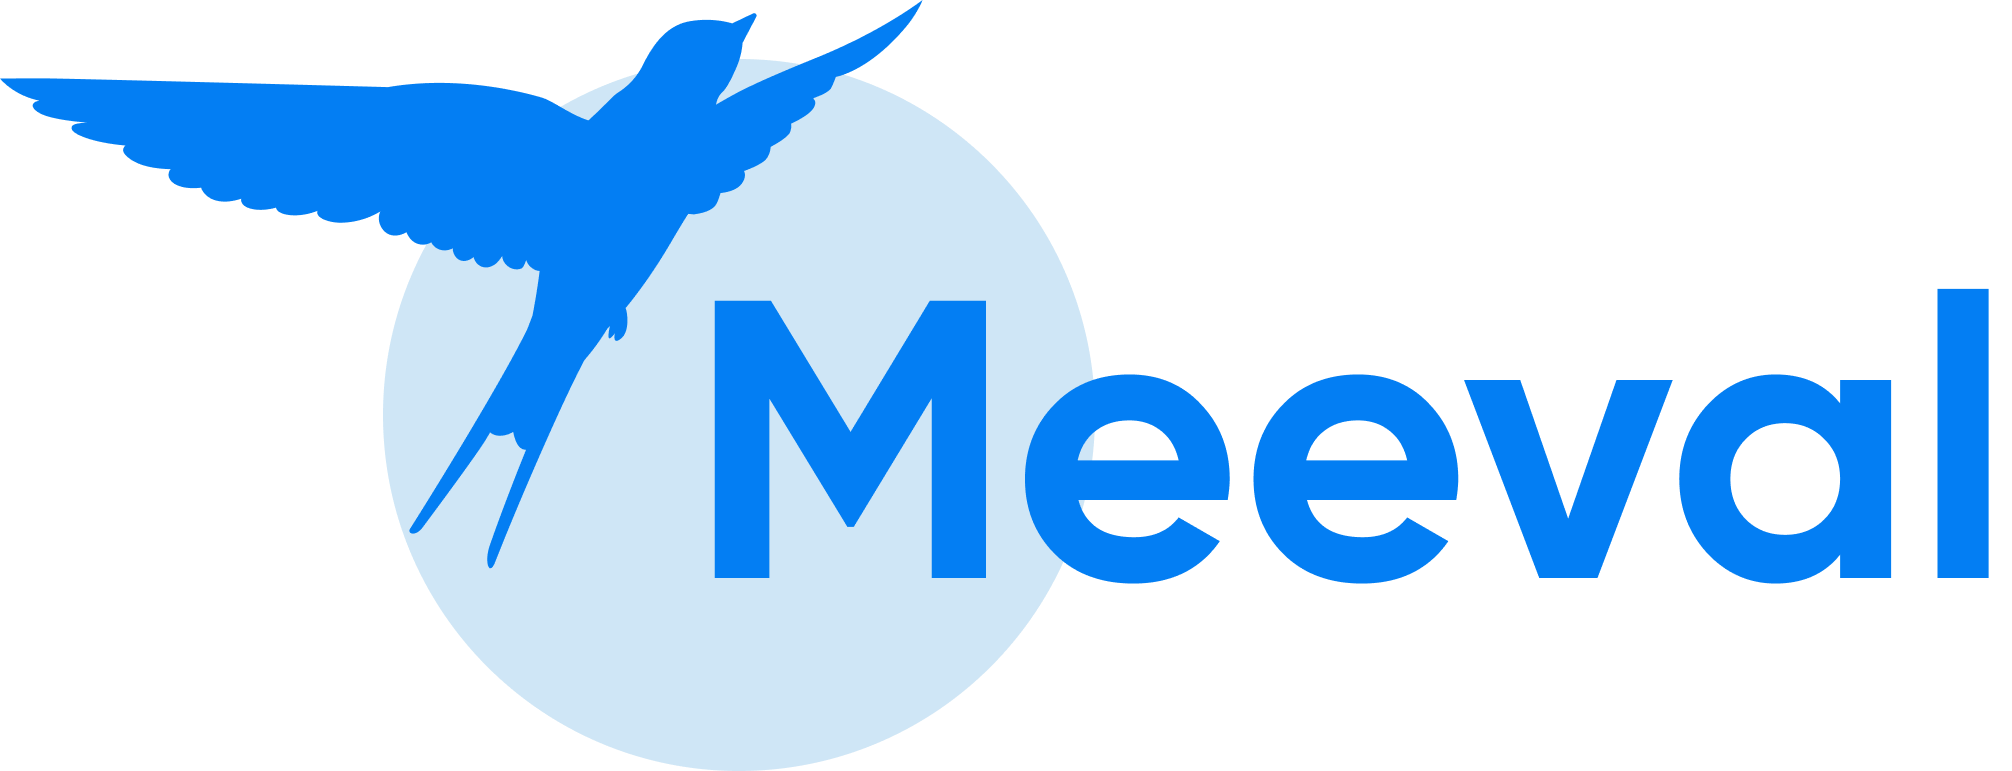 Meeval Logo